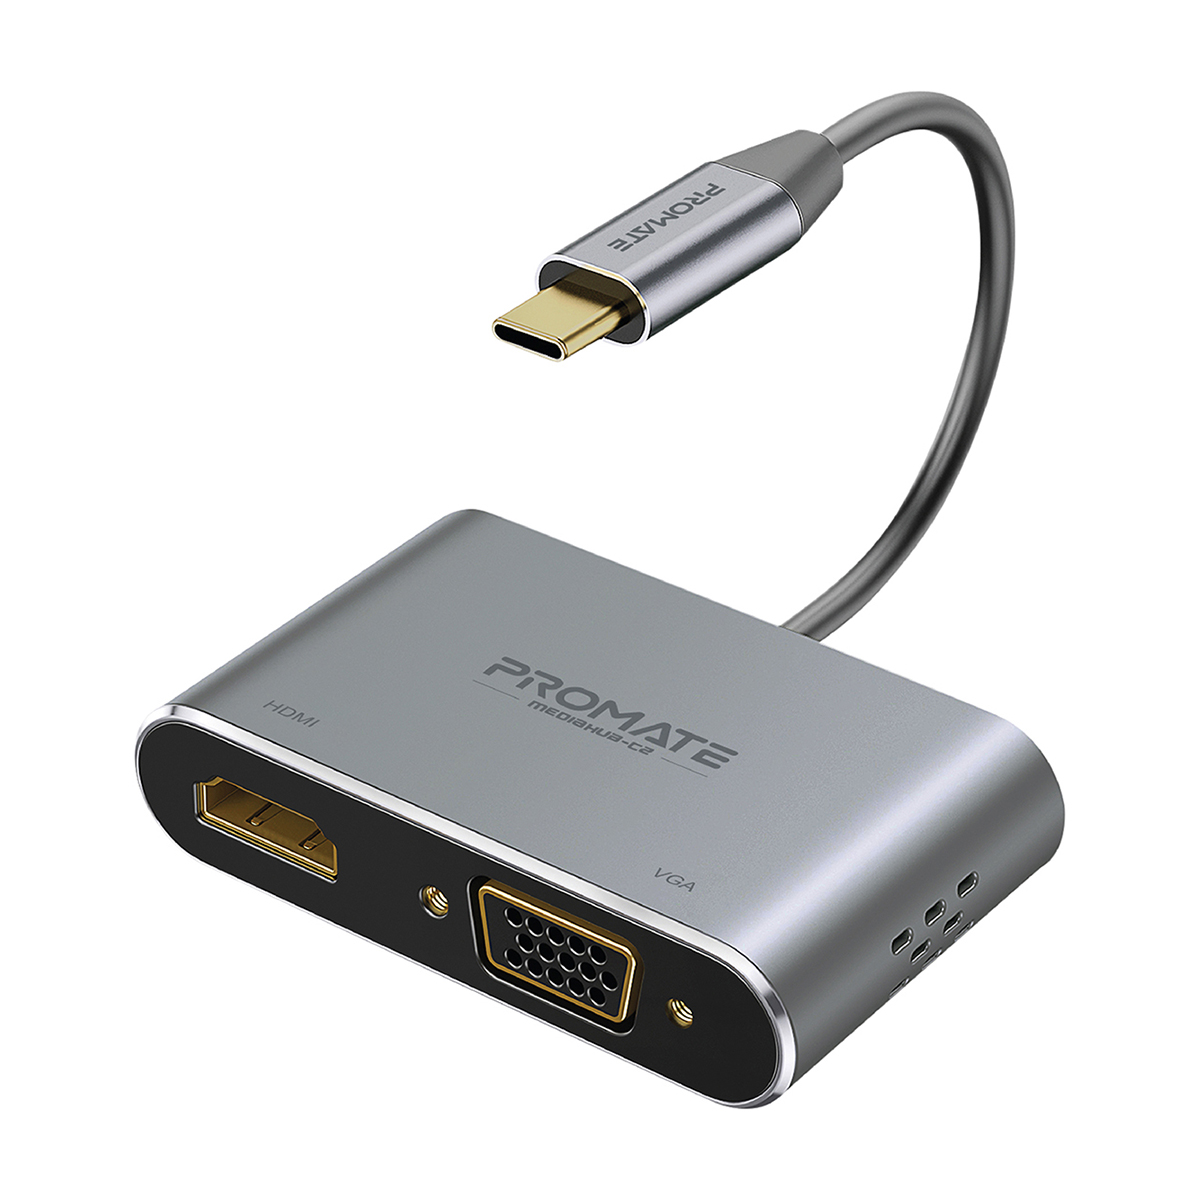 Promate High Definition USB-C Display Adapter (MediaHub-C2)